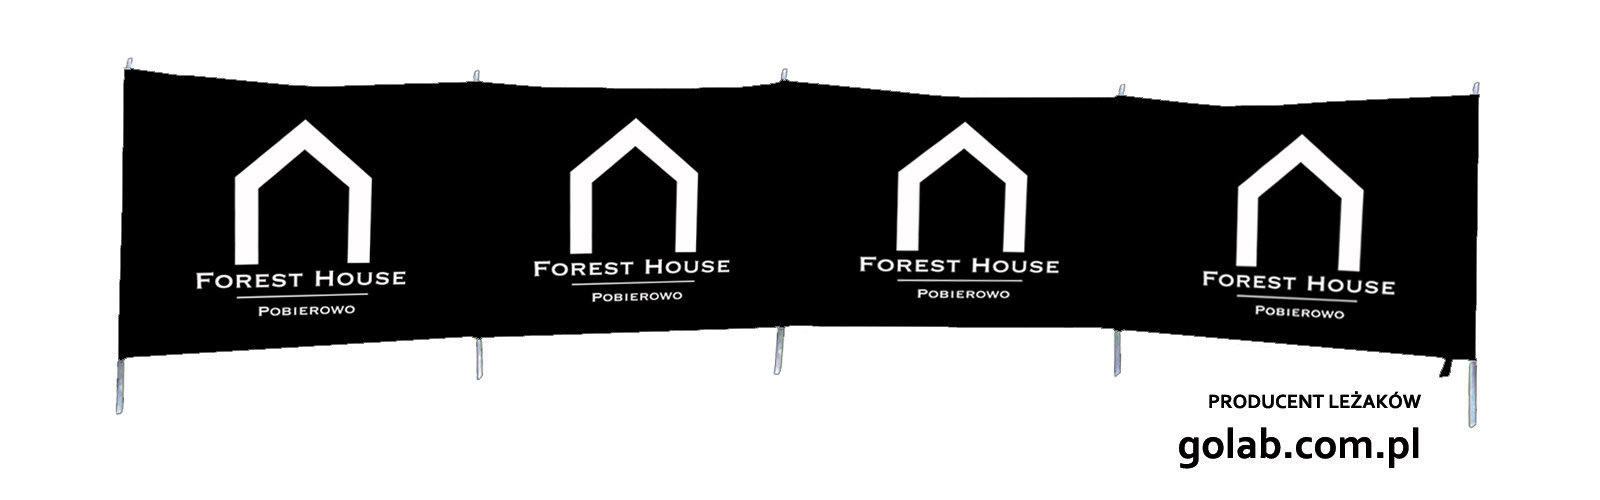 foresthouse3-parawan-golab.com_.pl_